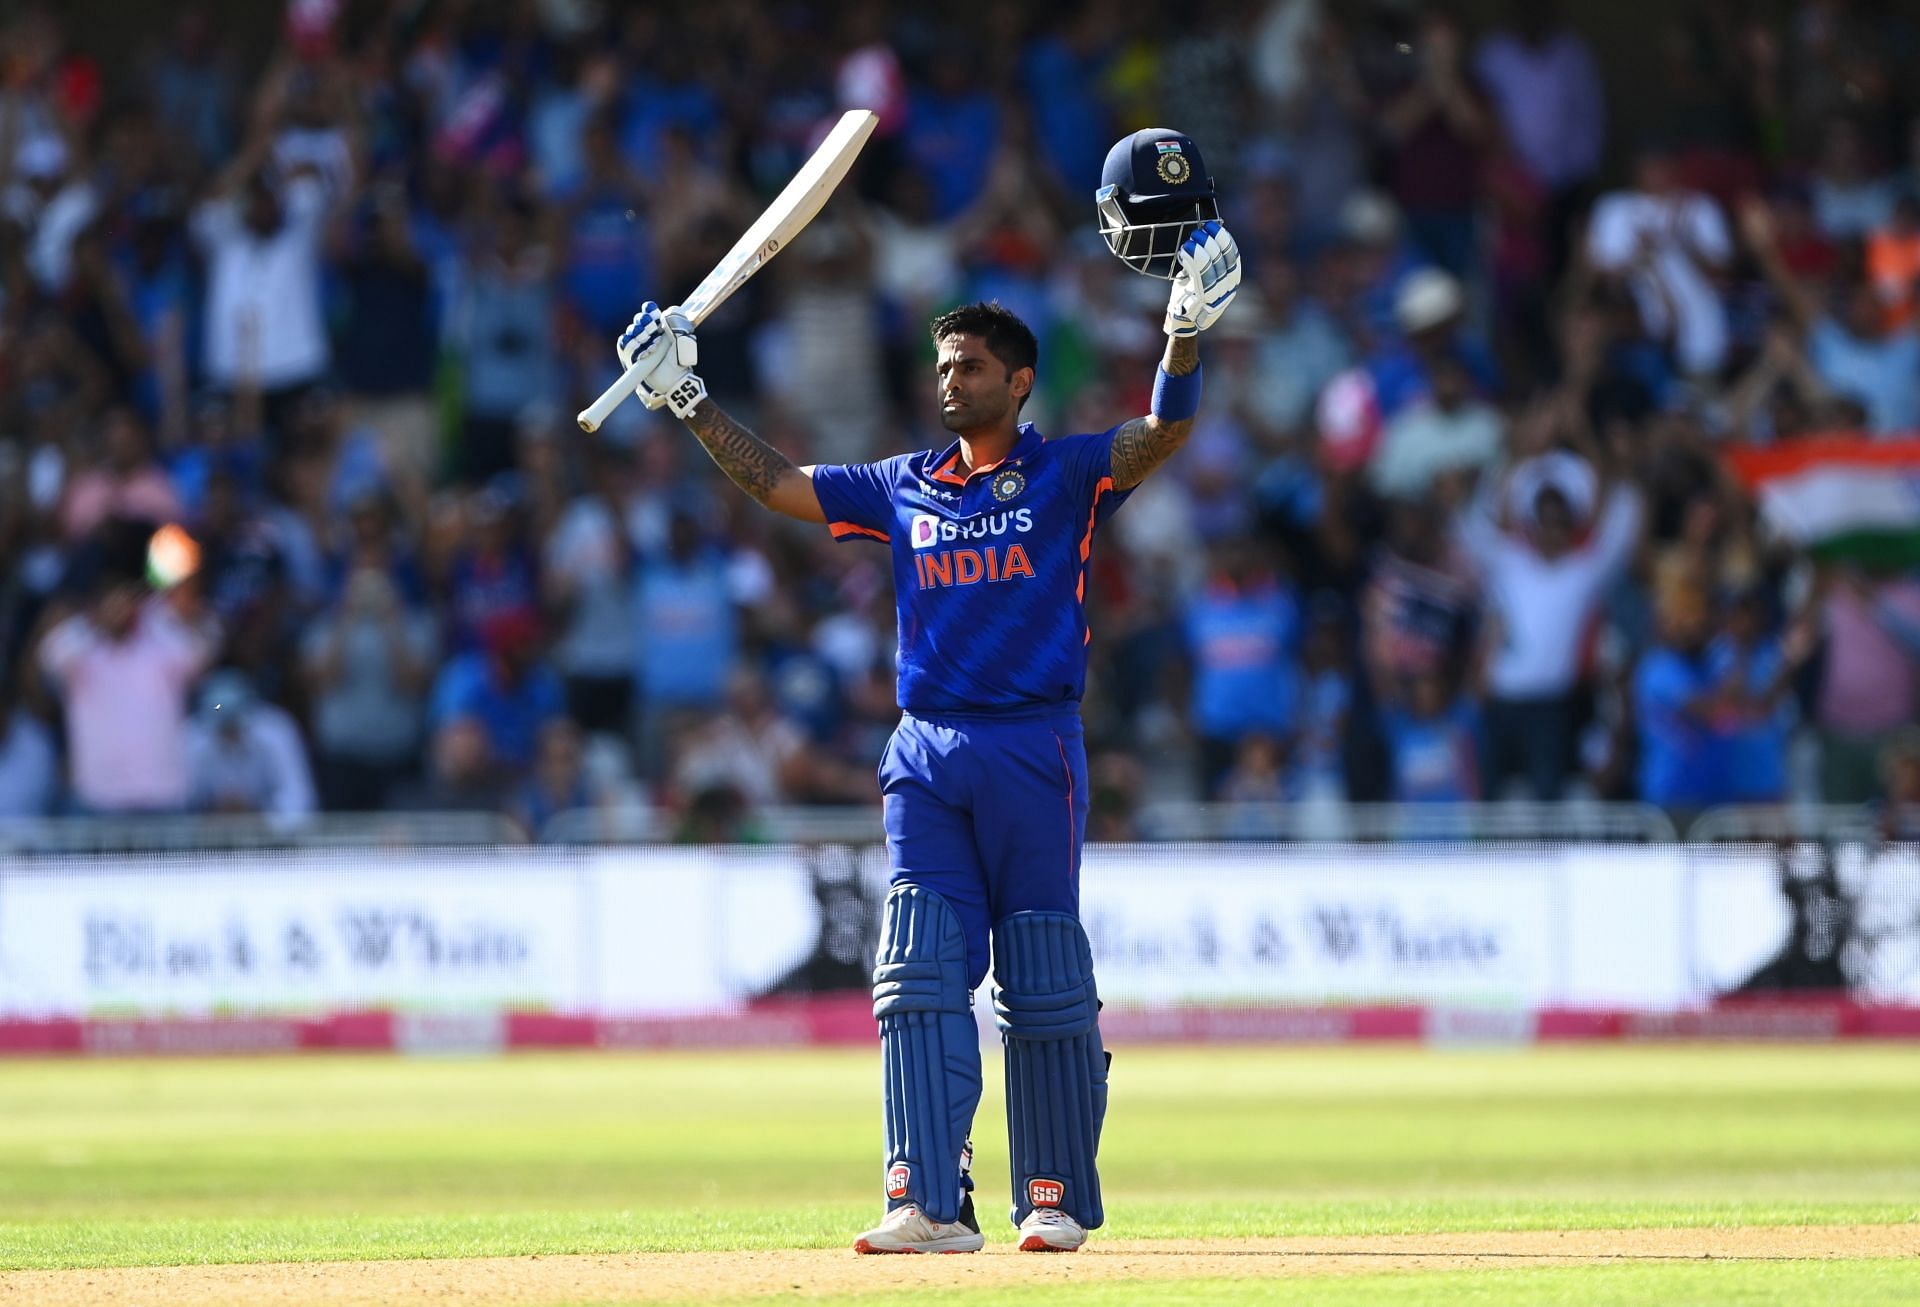 Suryakumar Yadav has emerged as one of the biggest match-winners for Team India